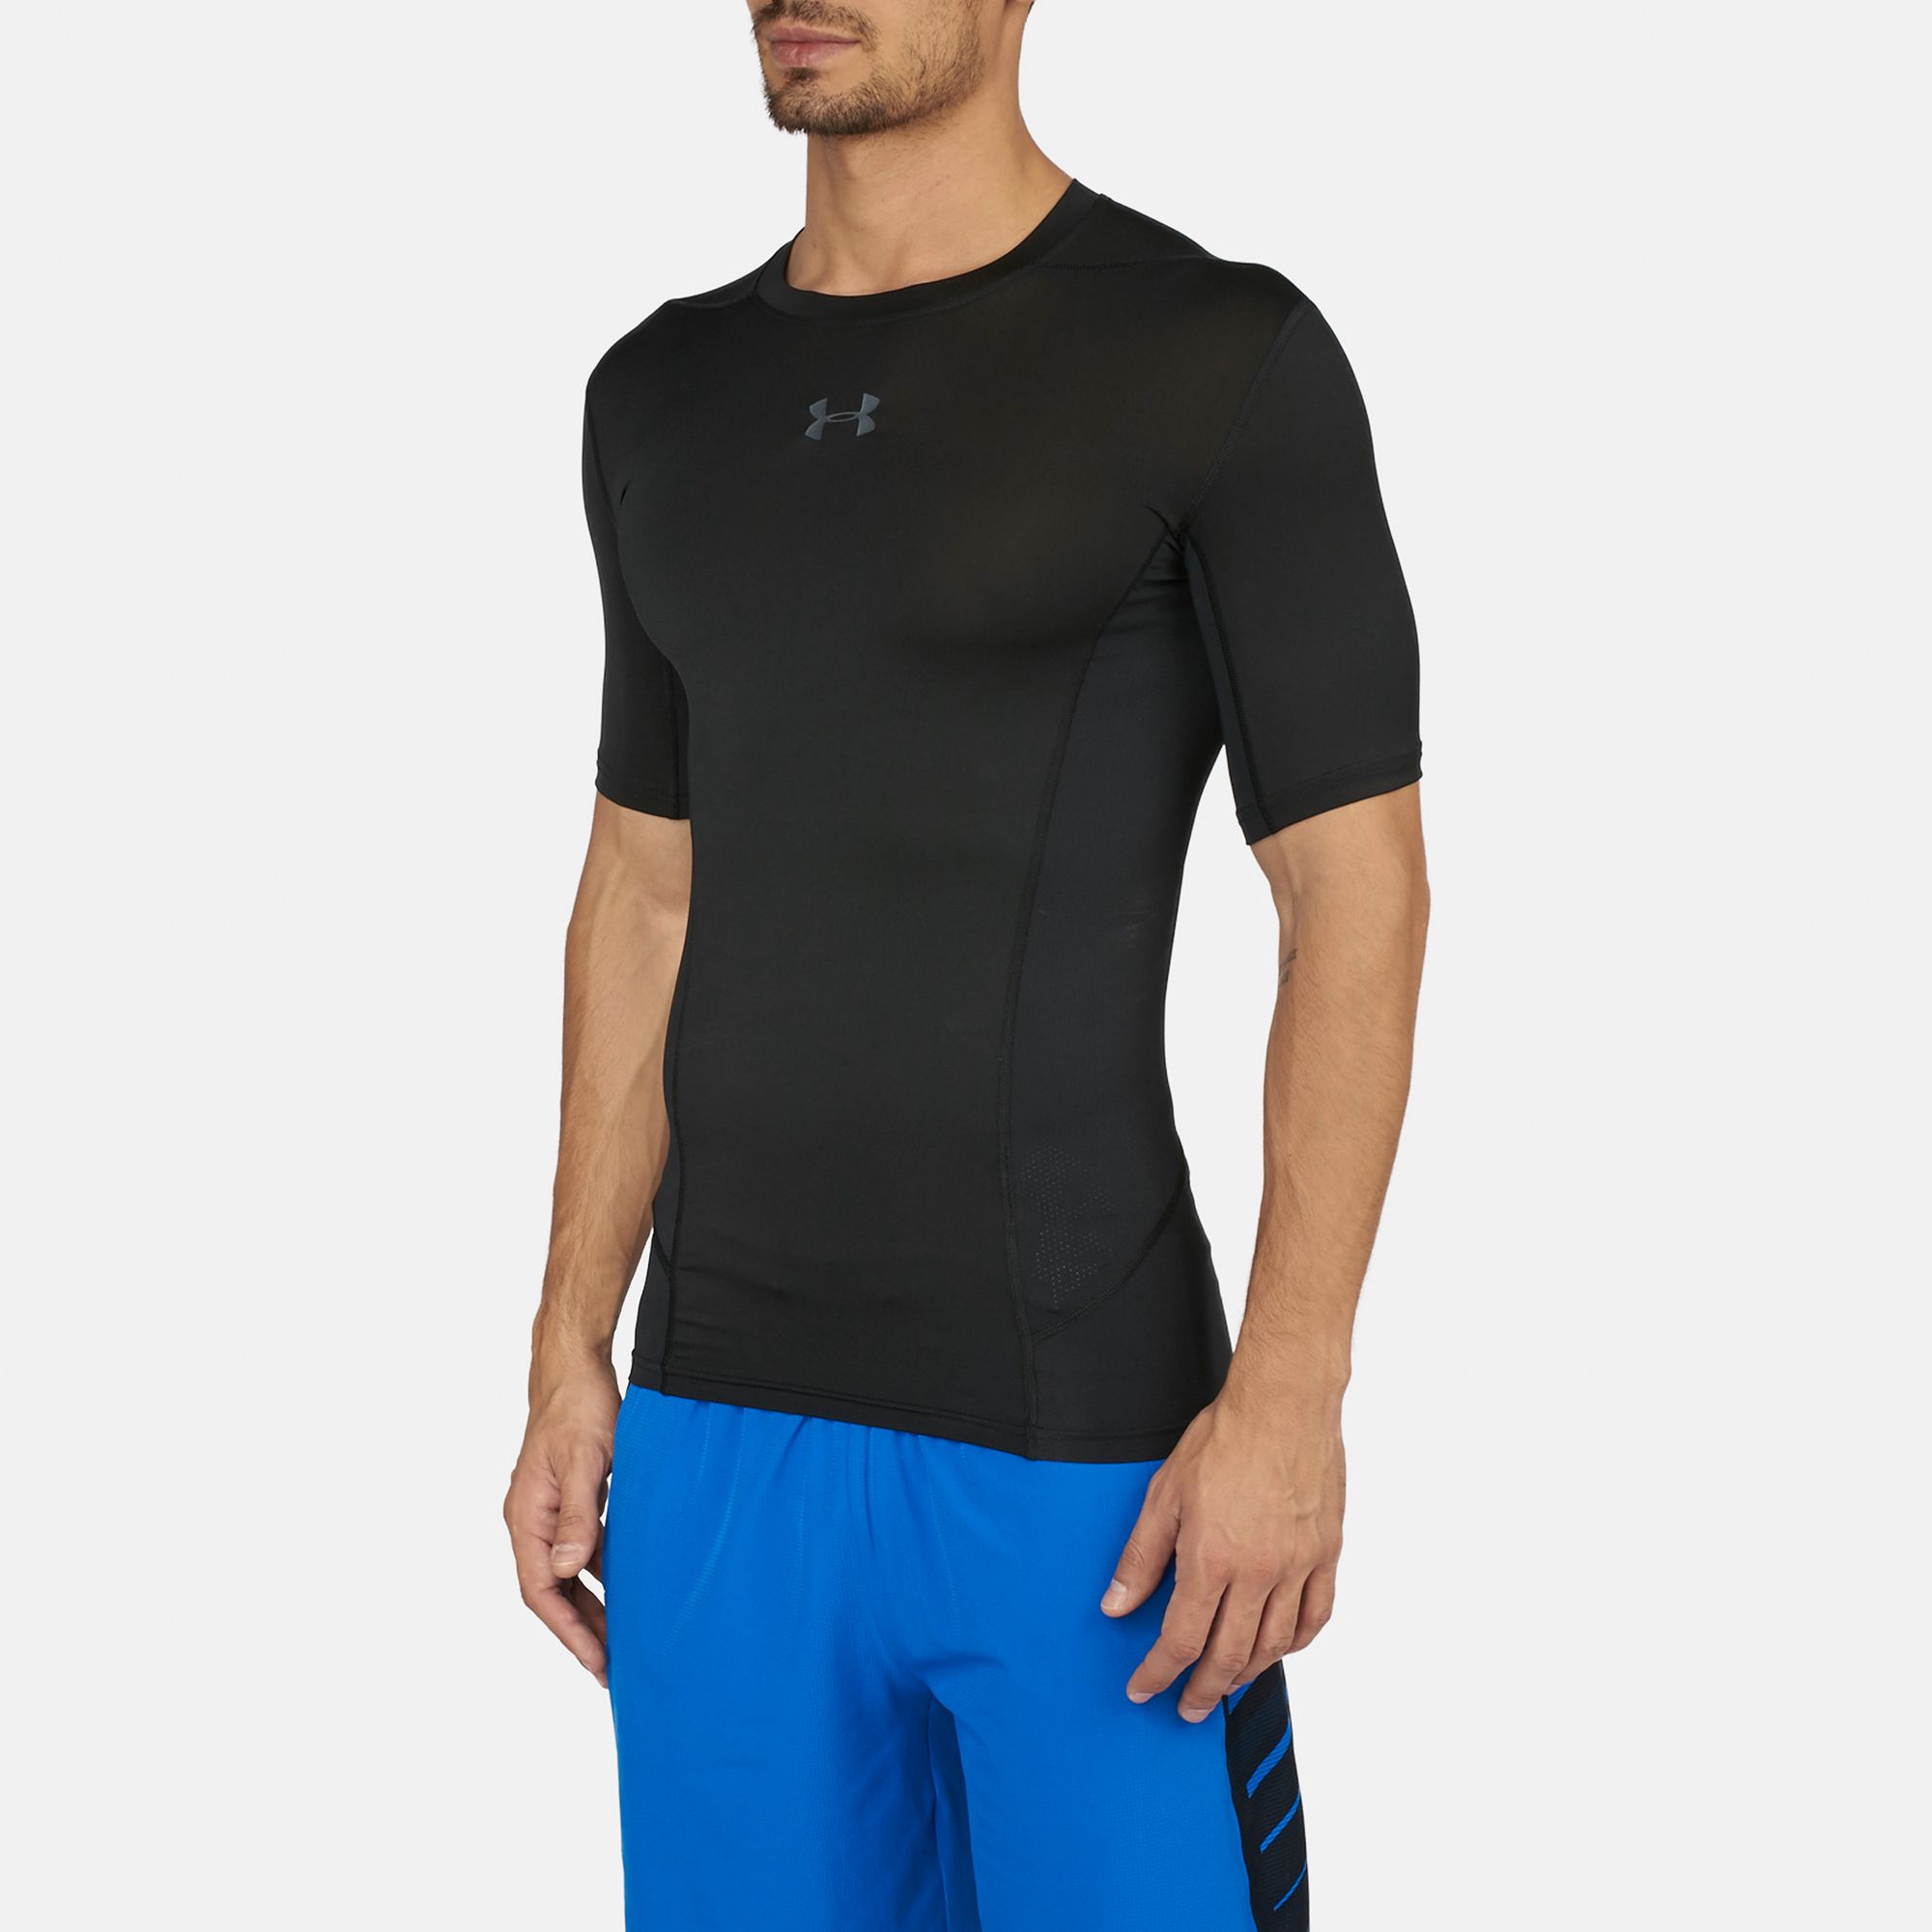 Shop Black Under Armour HeatGear Supervent 2.0 T-Shirt for Mens by ...